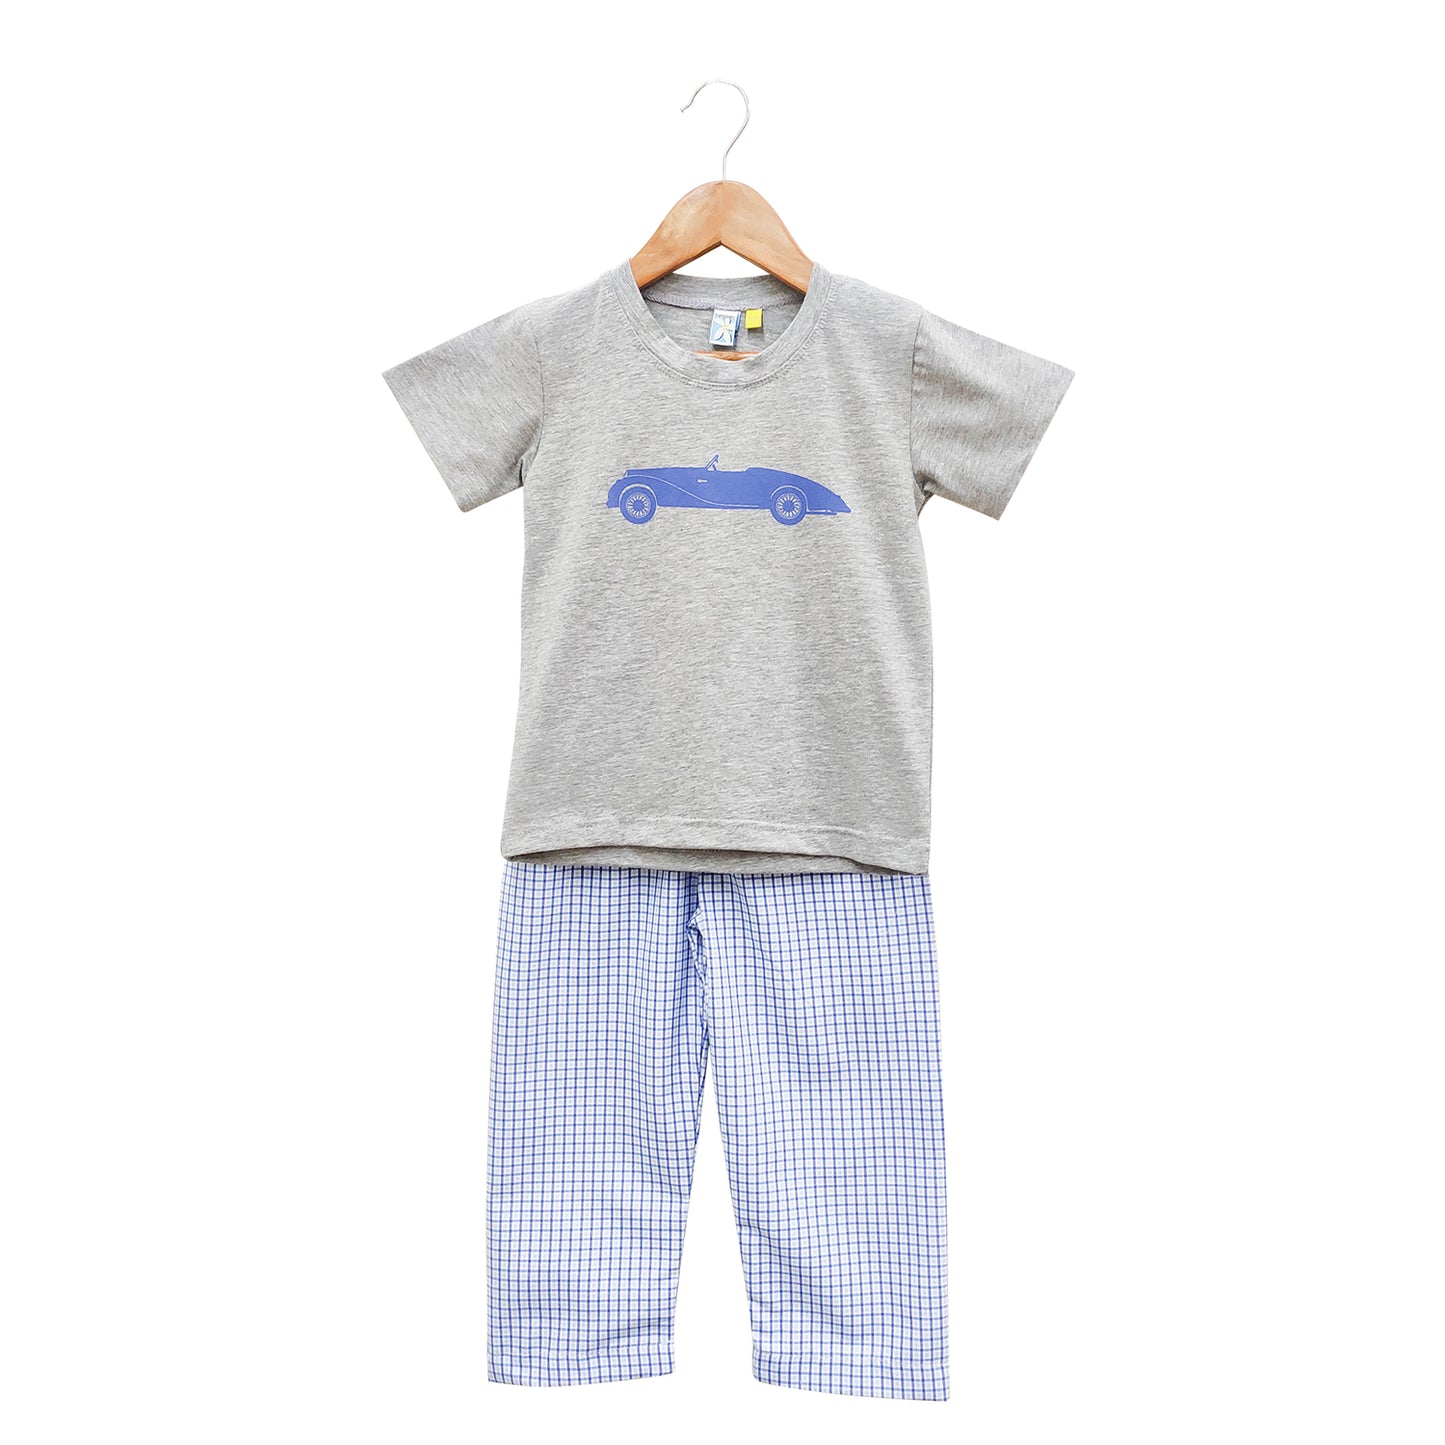 Grey Jersey Printed Tee With Blue Checked Pajamas Night Wear Set